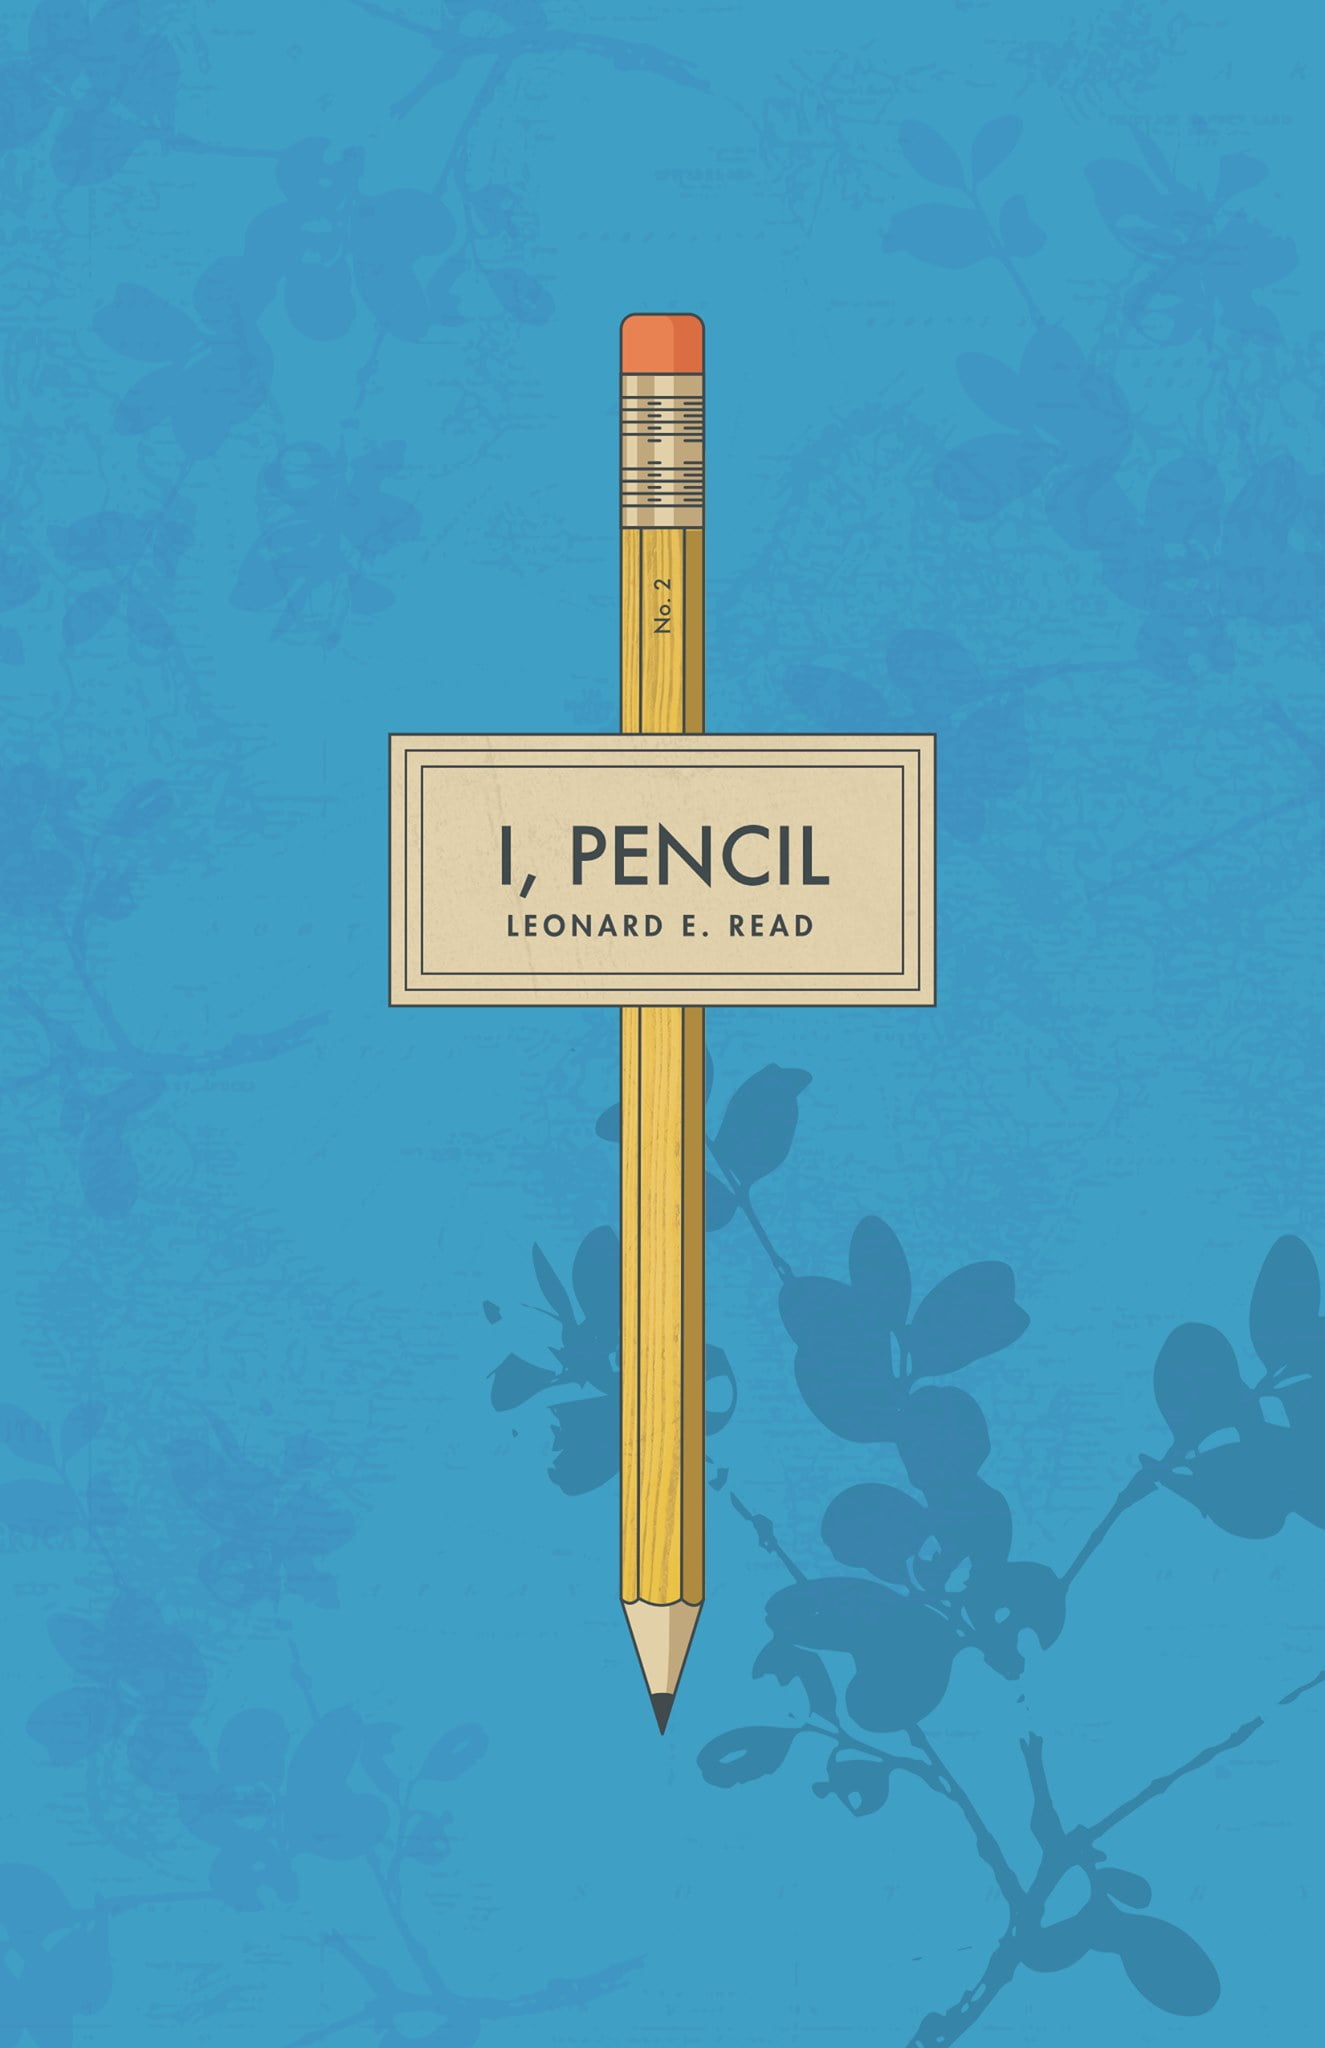 I, Pencil by Leonard E. Read